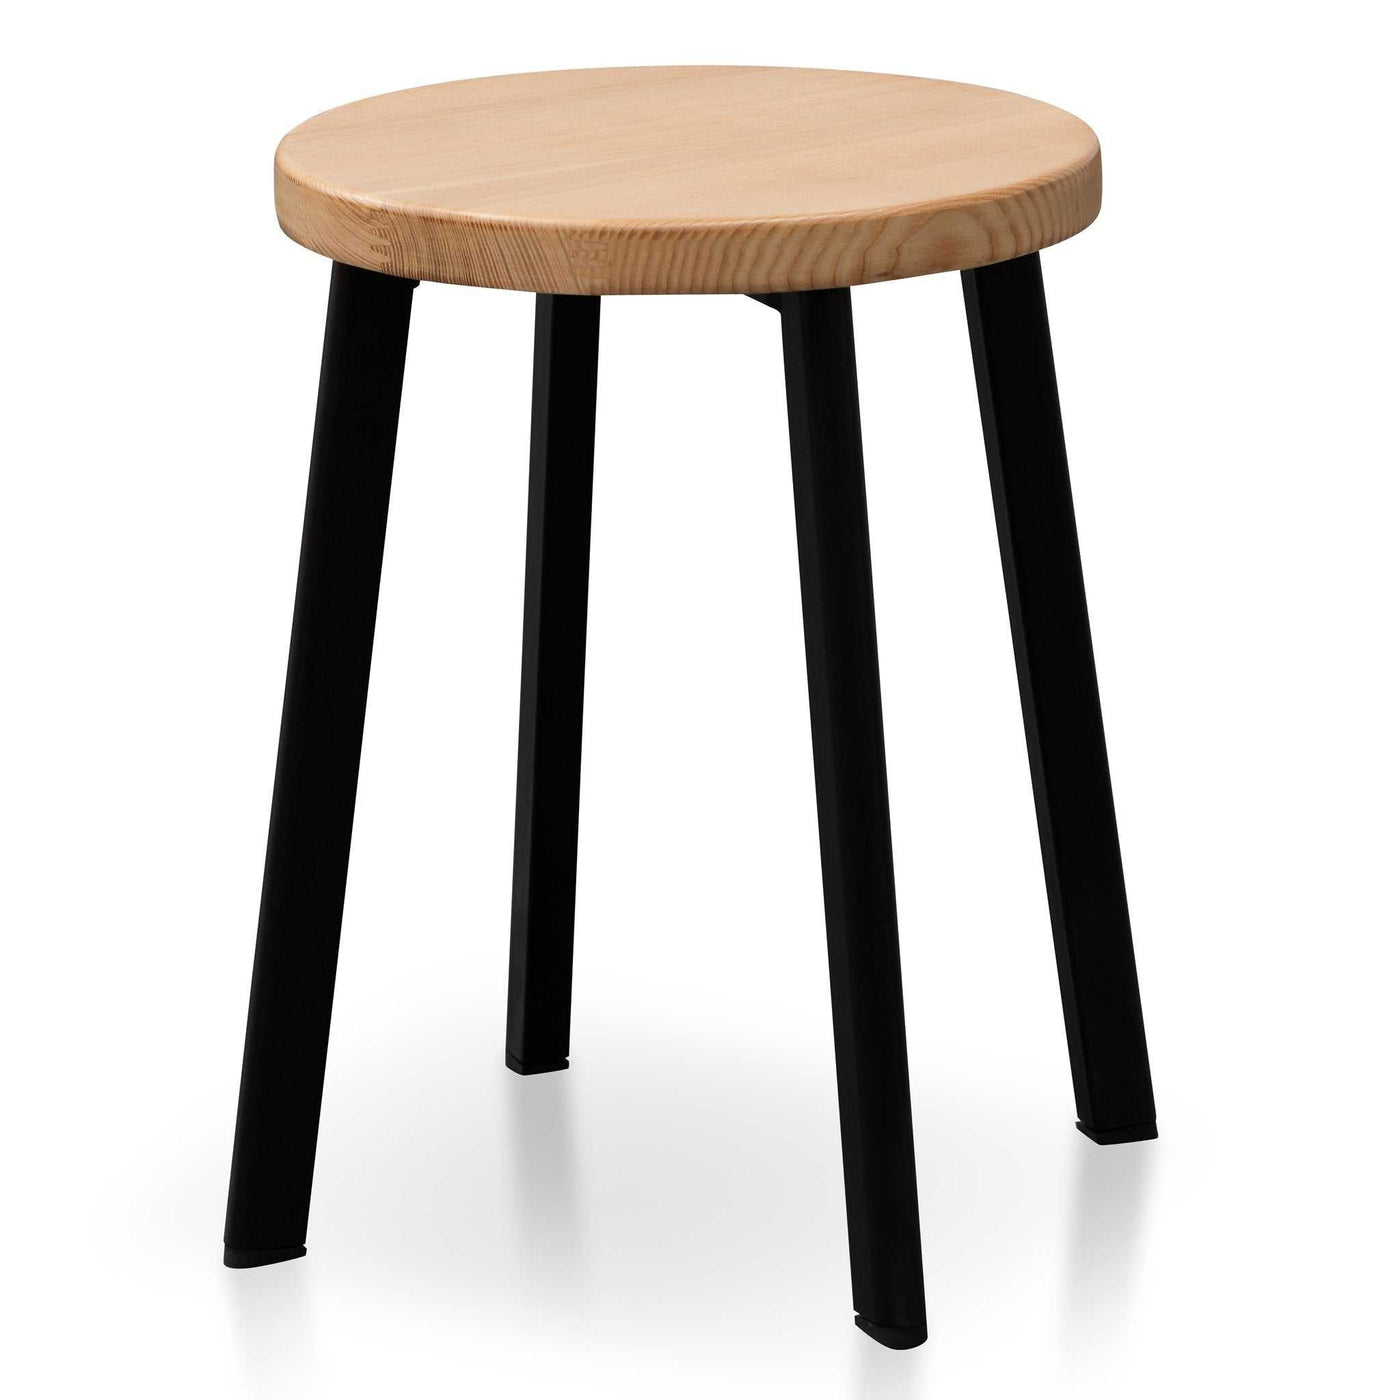 46cm Natural Wooden Seat Low Stool - Black Legs